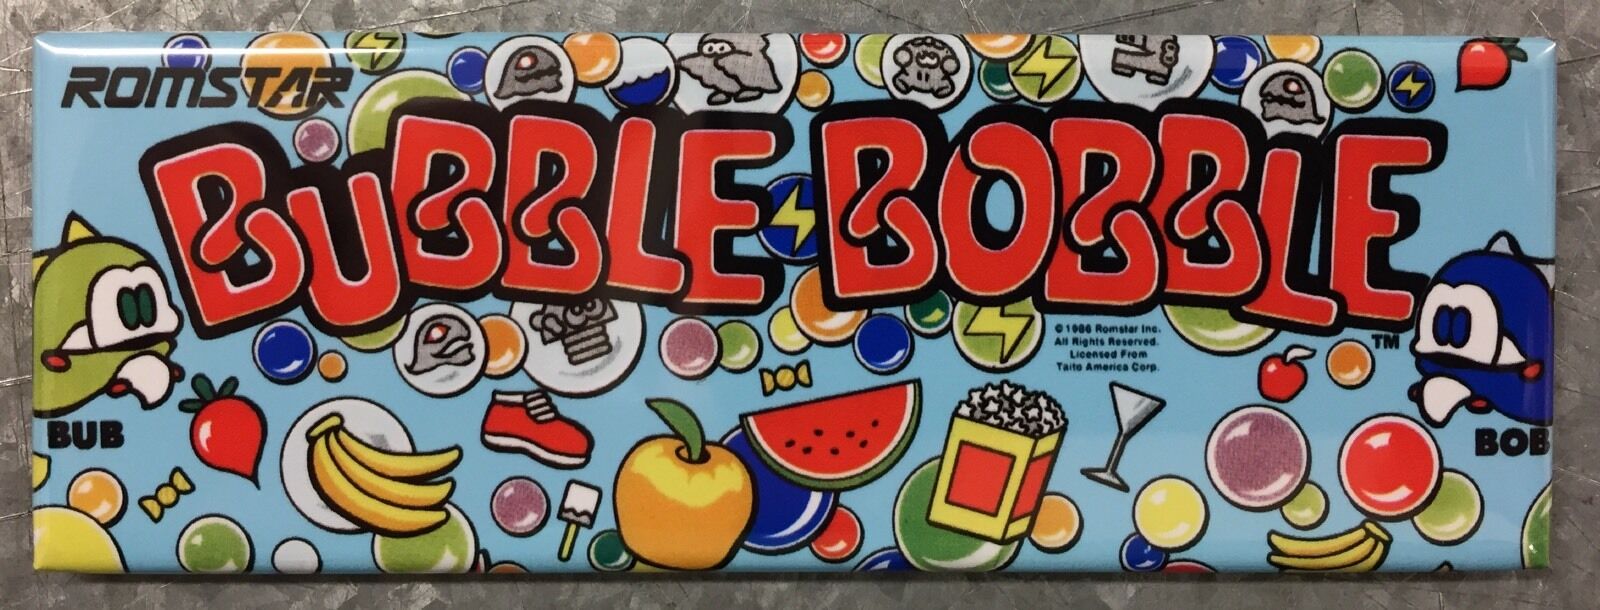 Bubble Bobble Arcade Game Marquee Fridge Magnet